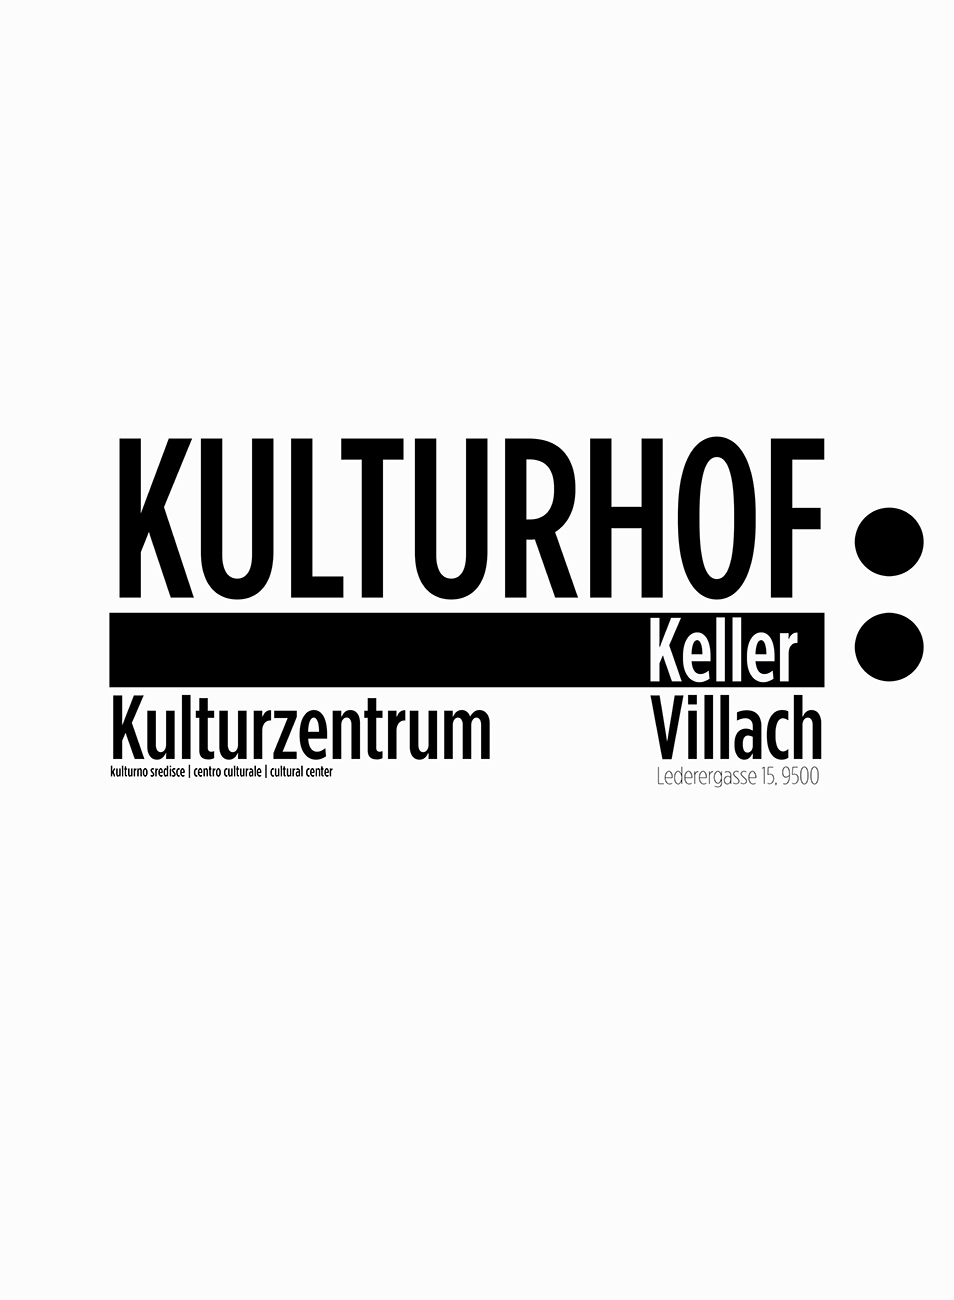 Kulturhofkeller